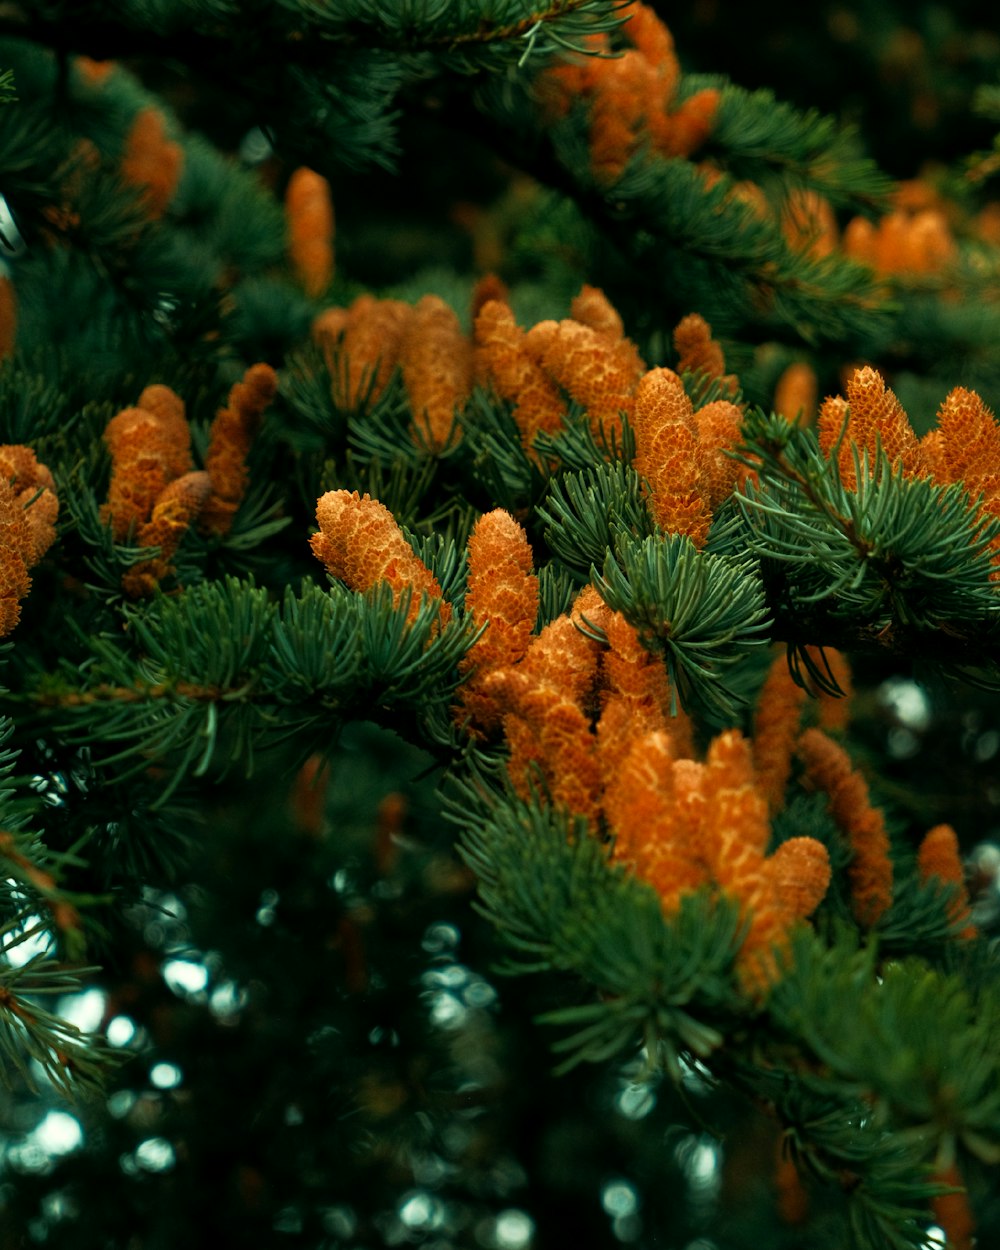 Un primer plano de un pino con conos naranjas